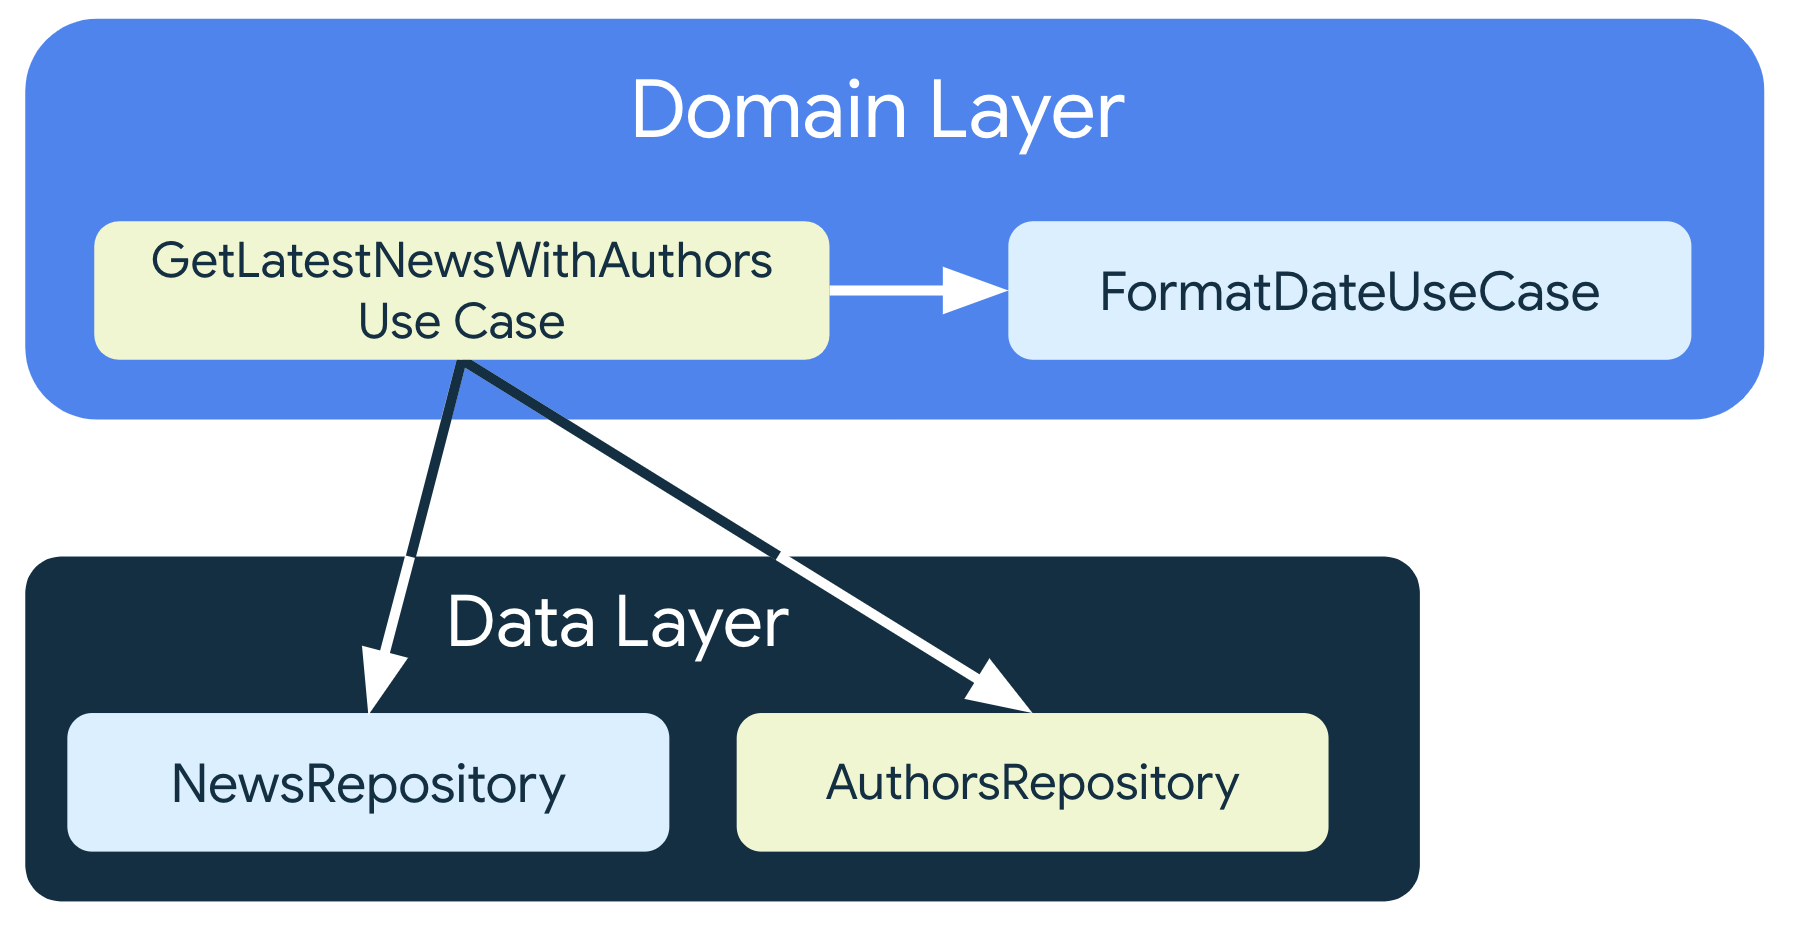 GetRecentNewsWithAuthorsUseCase bergantung pada class repositori dari
    lapisan data, tetapi juga bergantung pada FormatDataUseCase yang merupakan class kasus penggunaan
    lain yang juga berada di lapisan domain.